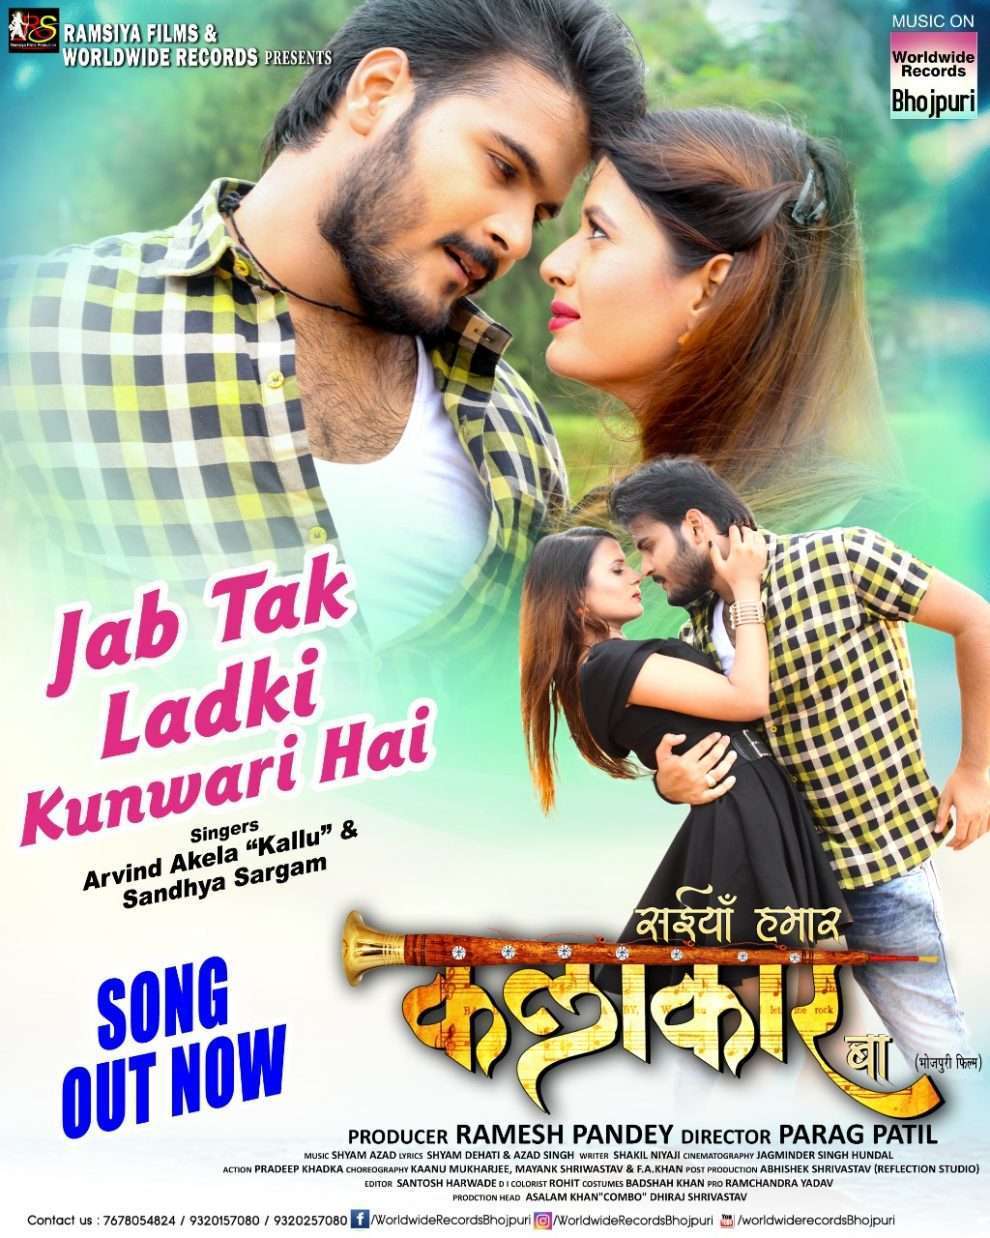 Arvind Akela Kallu की "SAIYAN HAMAR KALAKAR BAA" का Song World Wide Records Bhojpuri से हुआ रिलीज